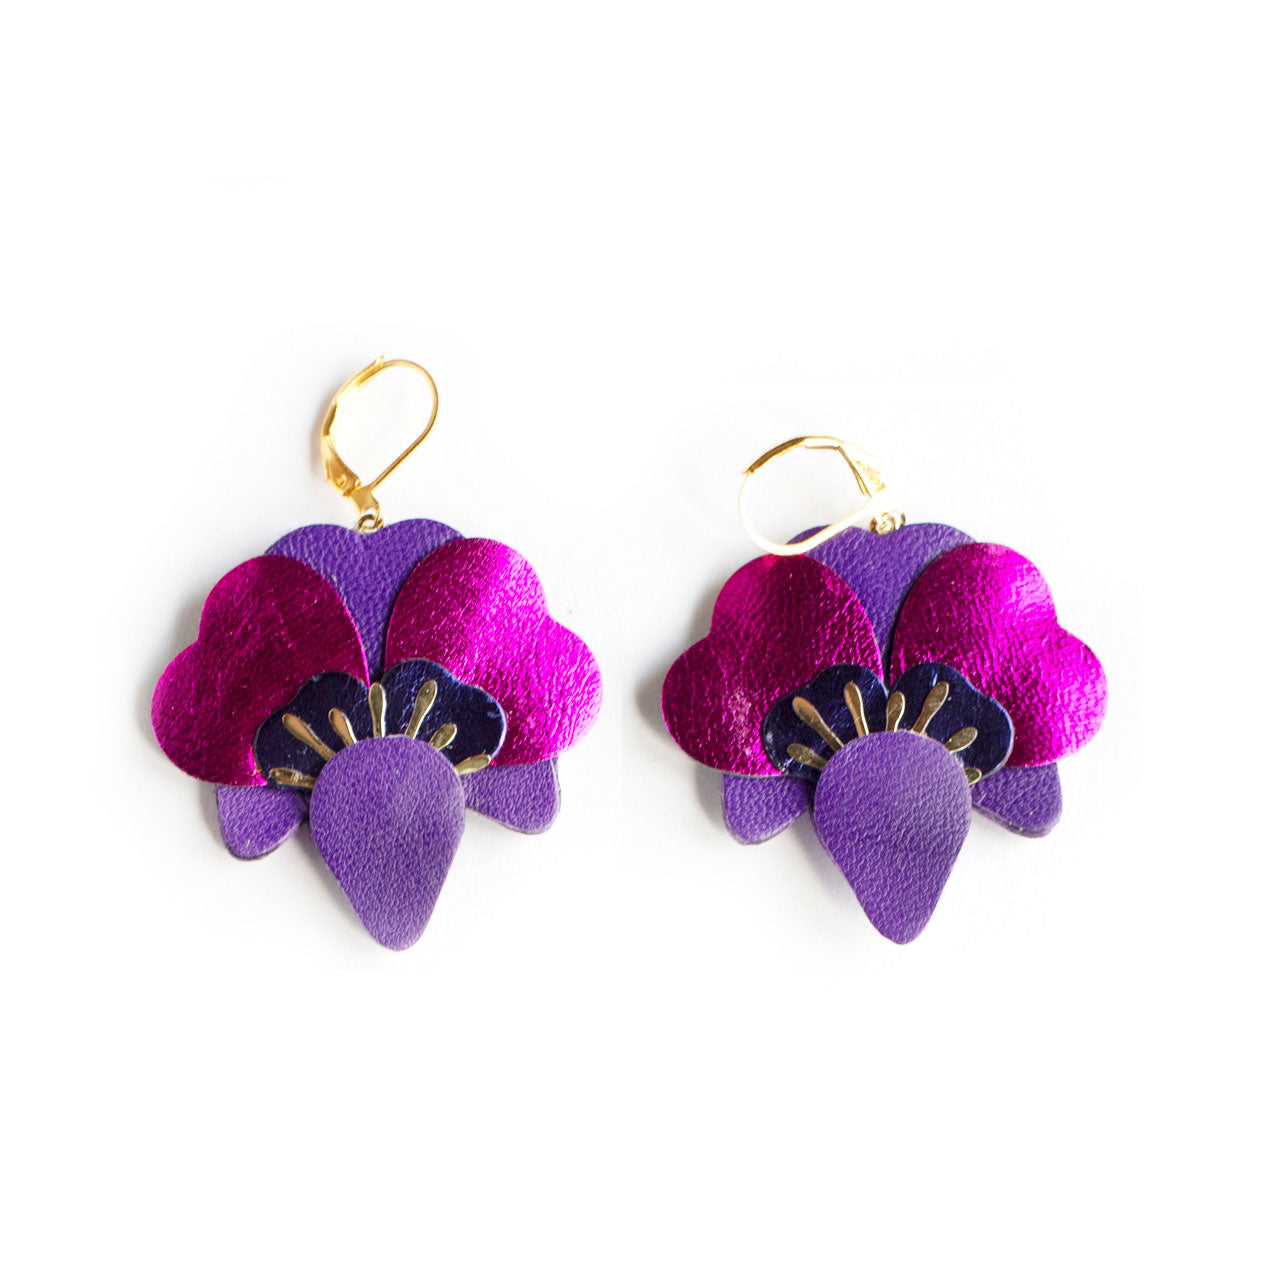 Orchid earrings - purple and metallic fuchsia pink